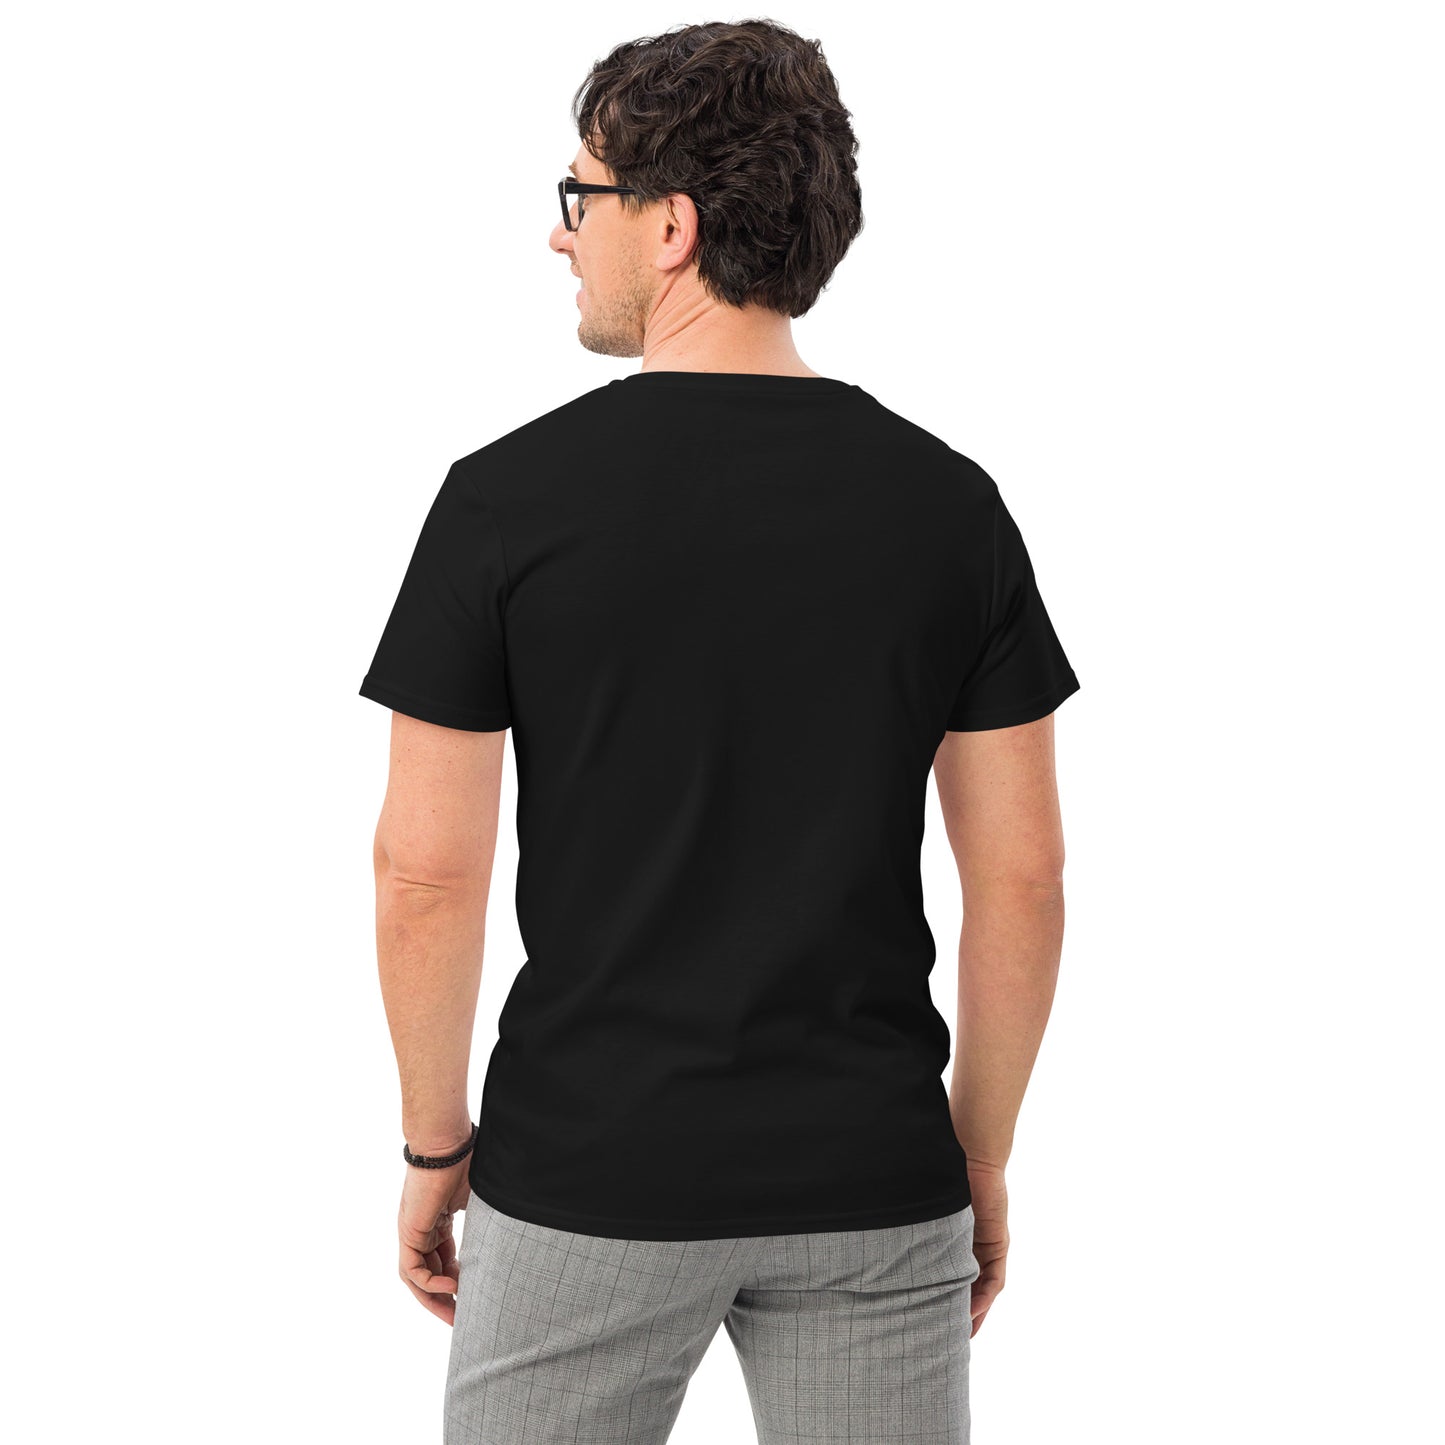 Back view of a white man wearing a black t-shirt